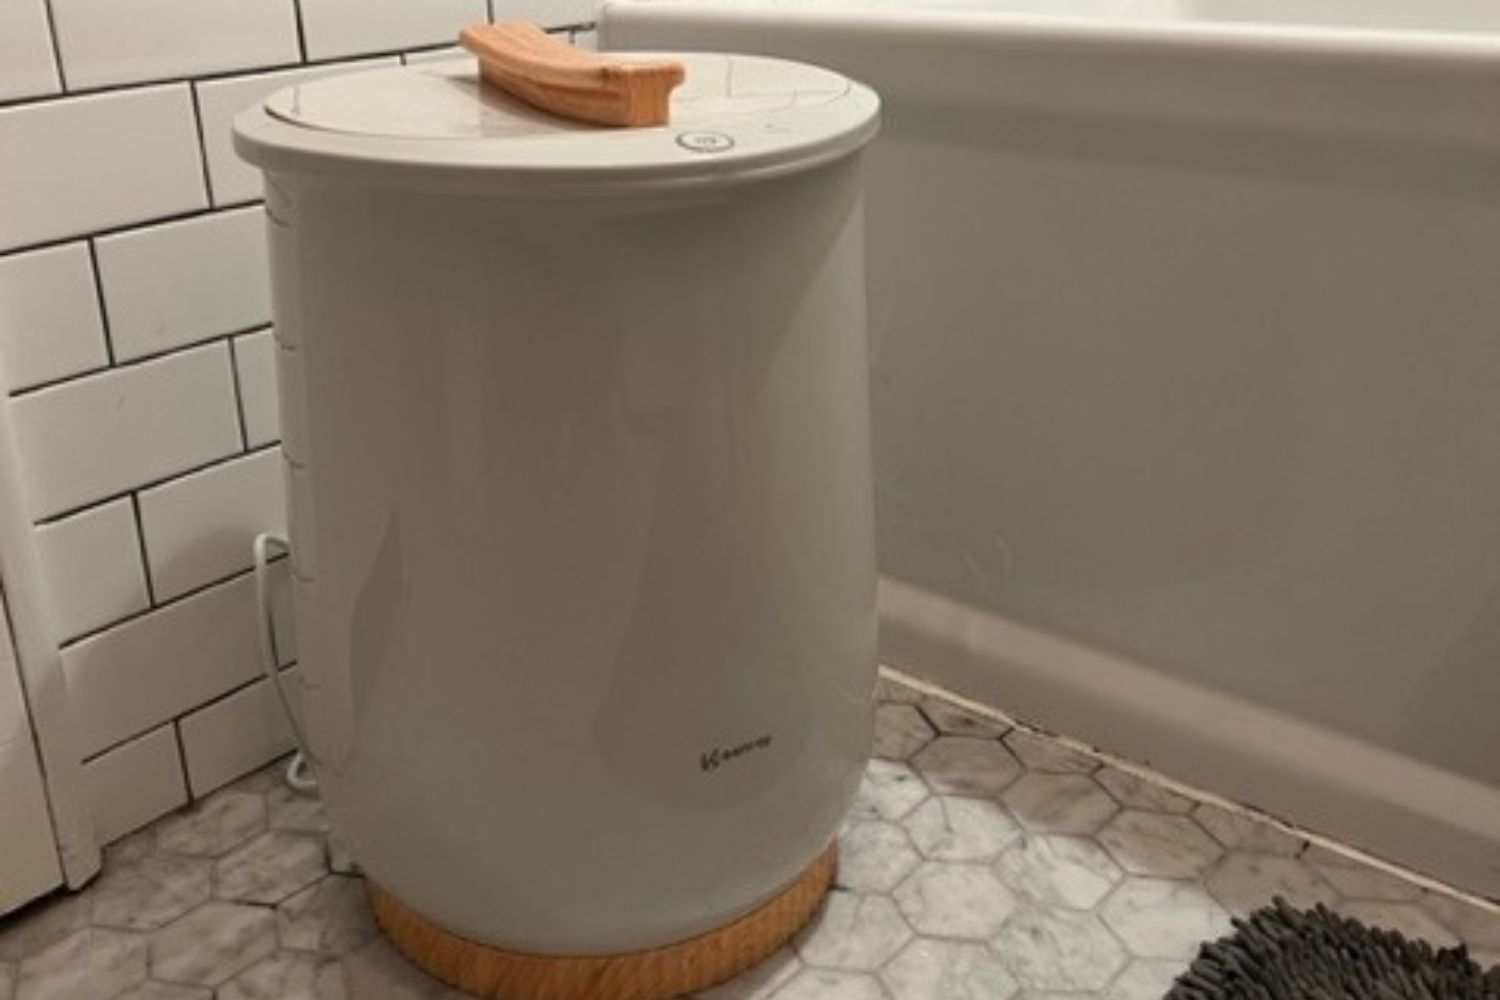 The The Keenray Bucket Towel Warmer on a tiled bathroom floor next to a bathtub.